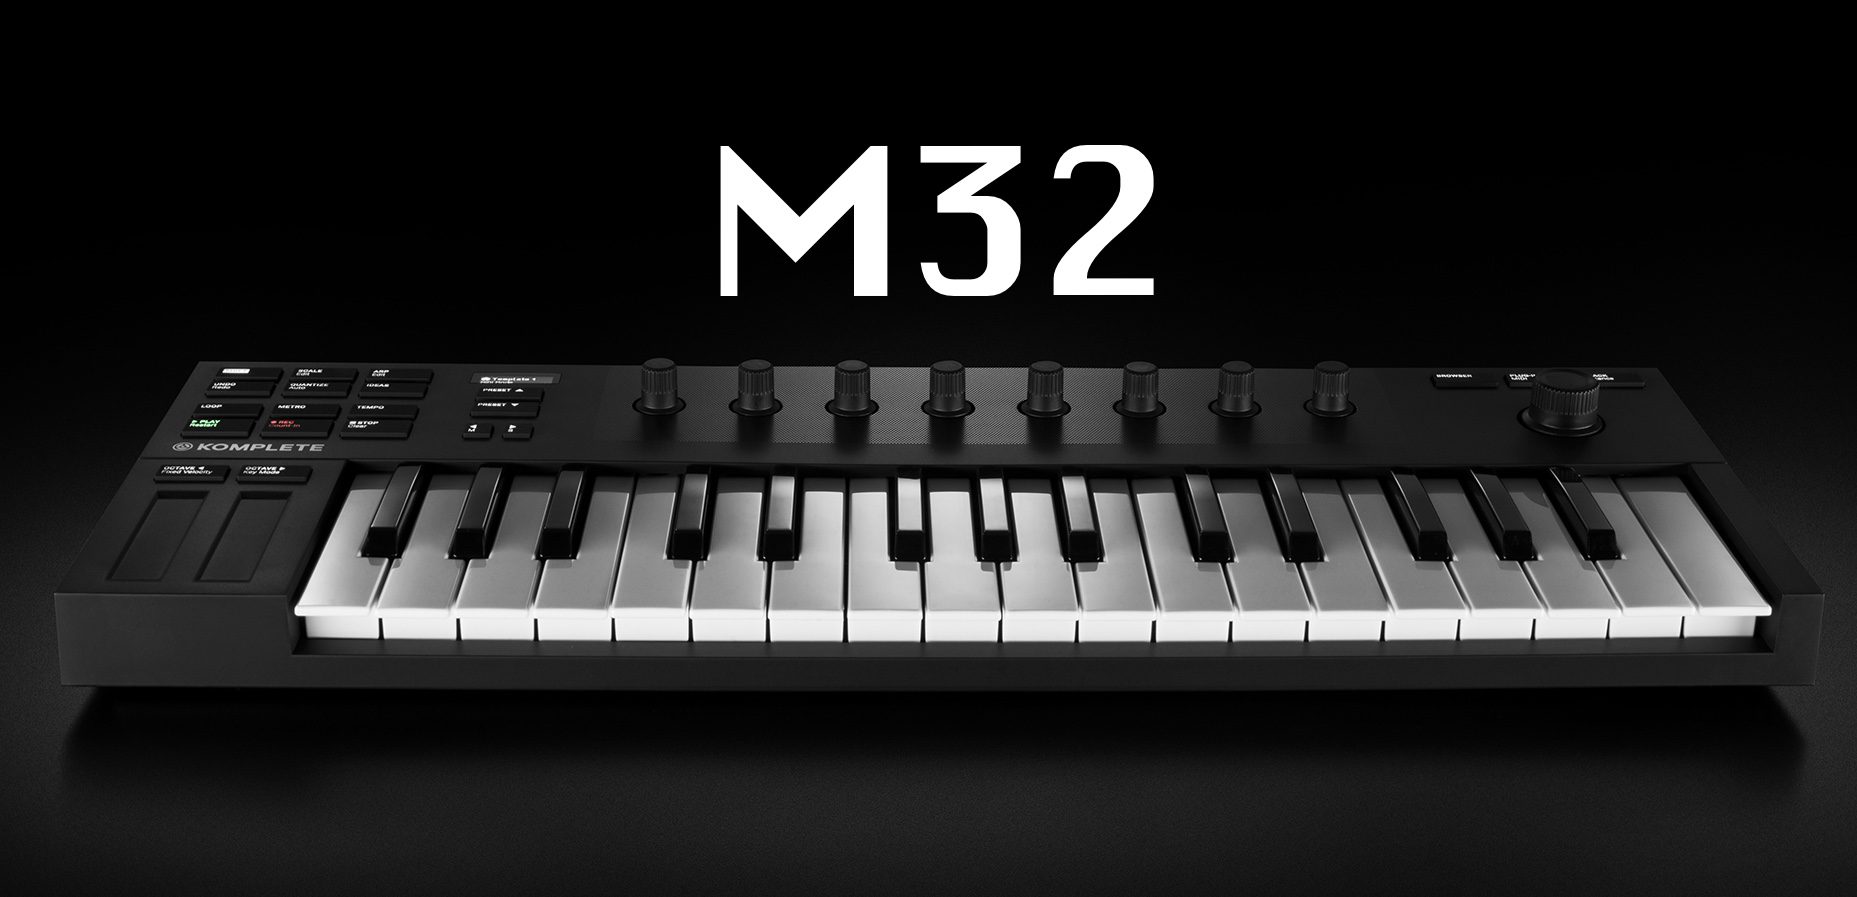 komplete kontrol m32 keyboard